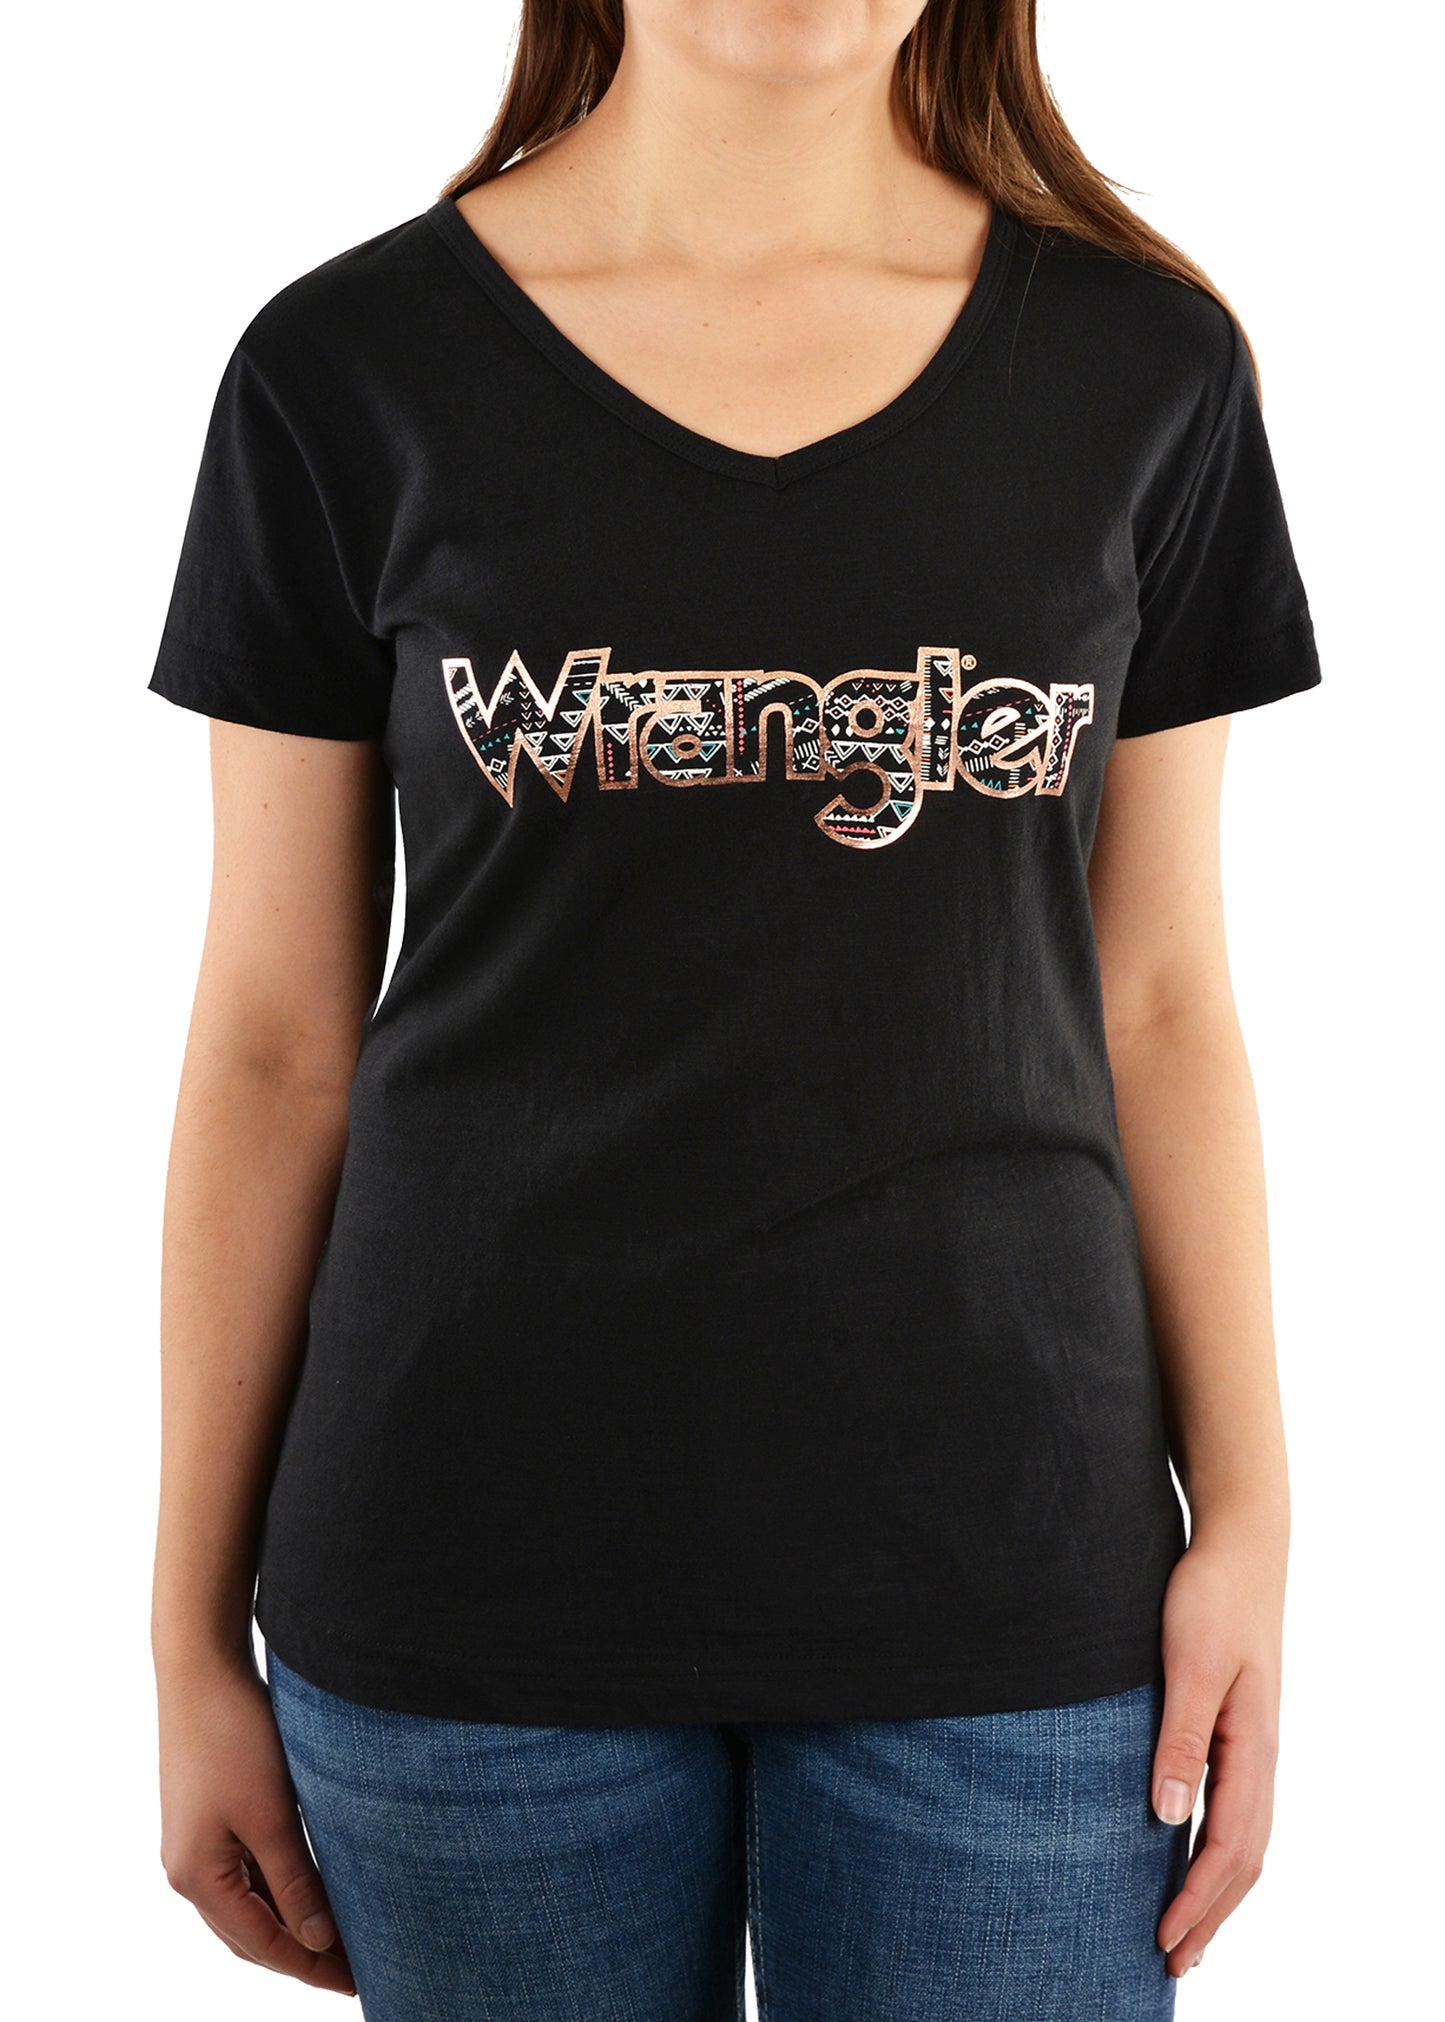 Wrangler Ladies Dedrie Short Sleeve Tee Shirt - X1S2598714 - On Sale